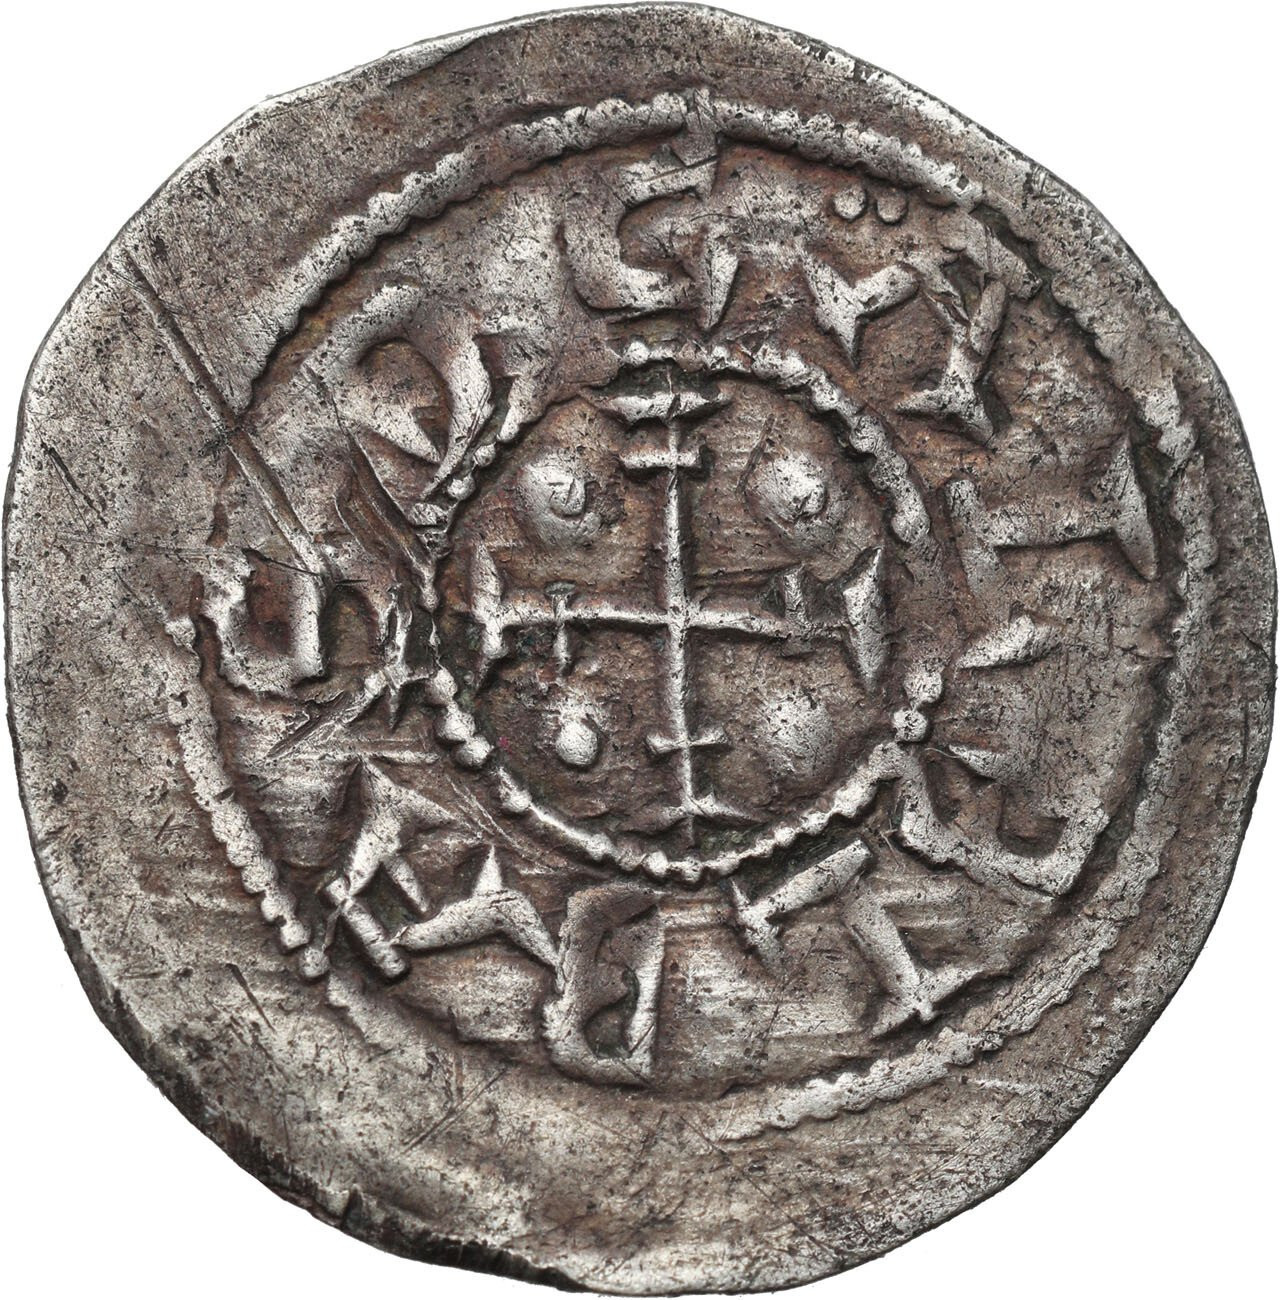 Bolesław III Krzywousty (1107-1138). Denar (1102-1138)